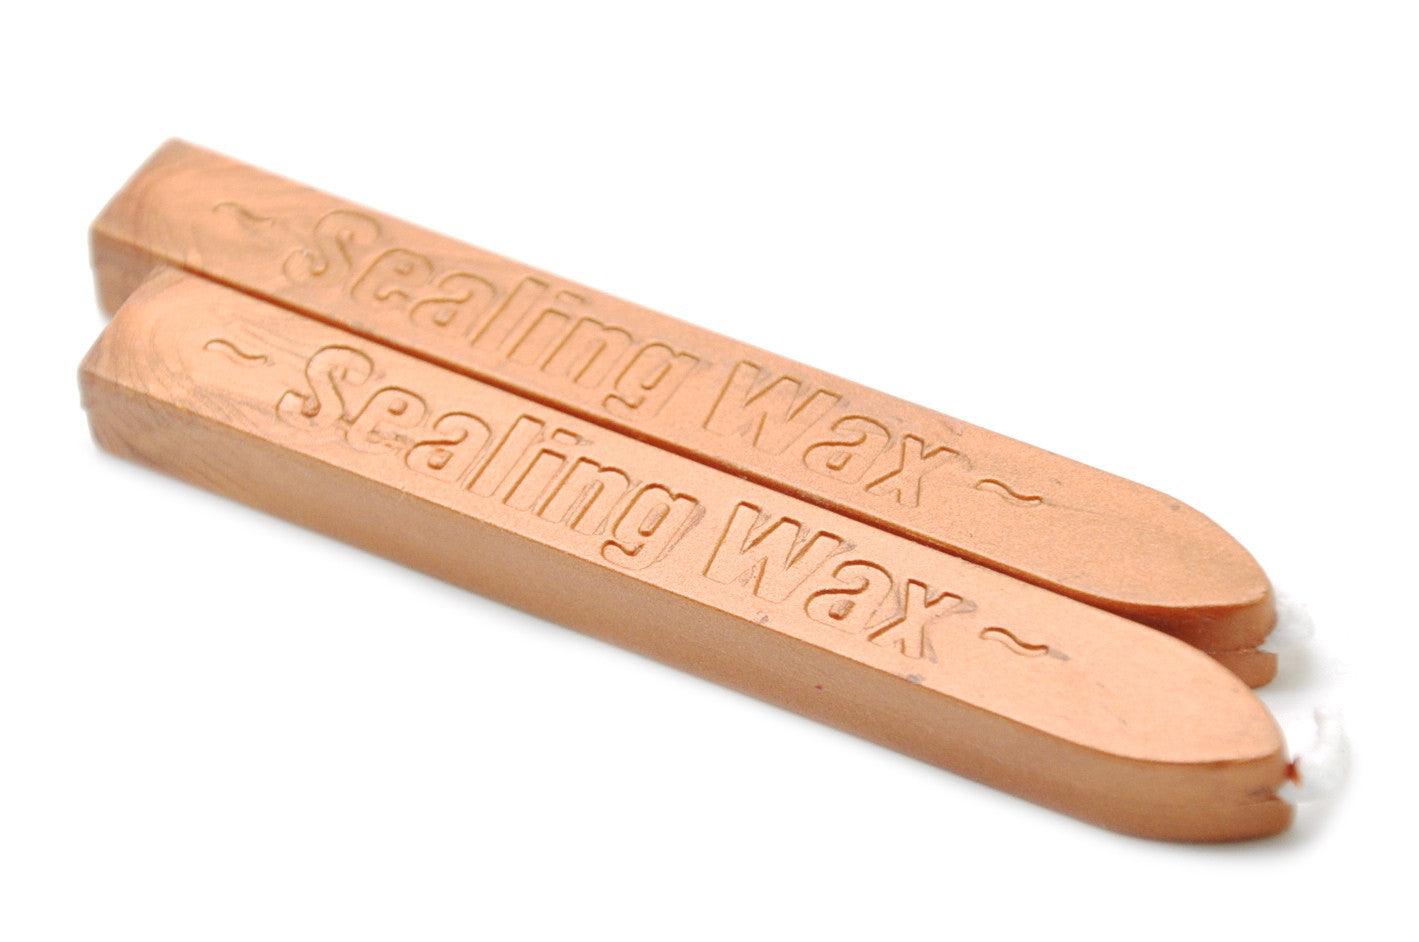 Copper Gold Wick Sealing Wax Stick - Backtozero B20 - Copper Gold, sale, Sealing Wax, Wick Stick, Wick Wax, wwax, wwf